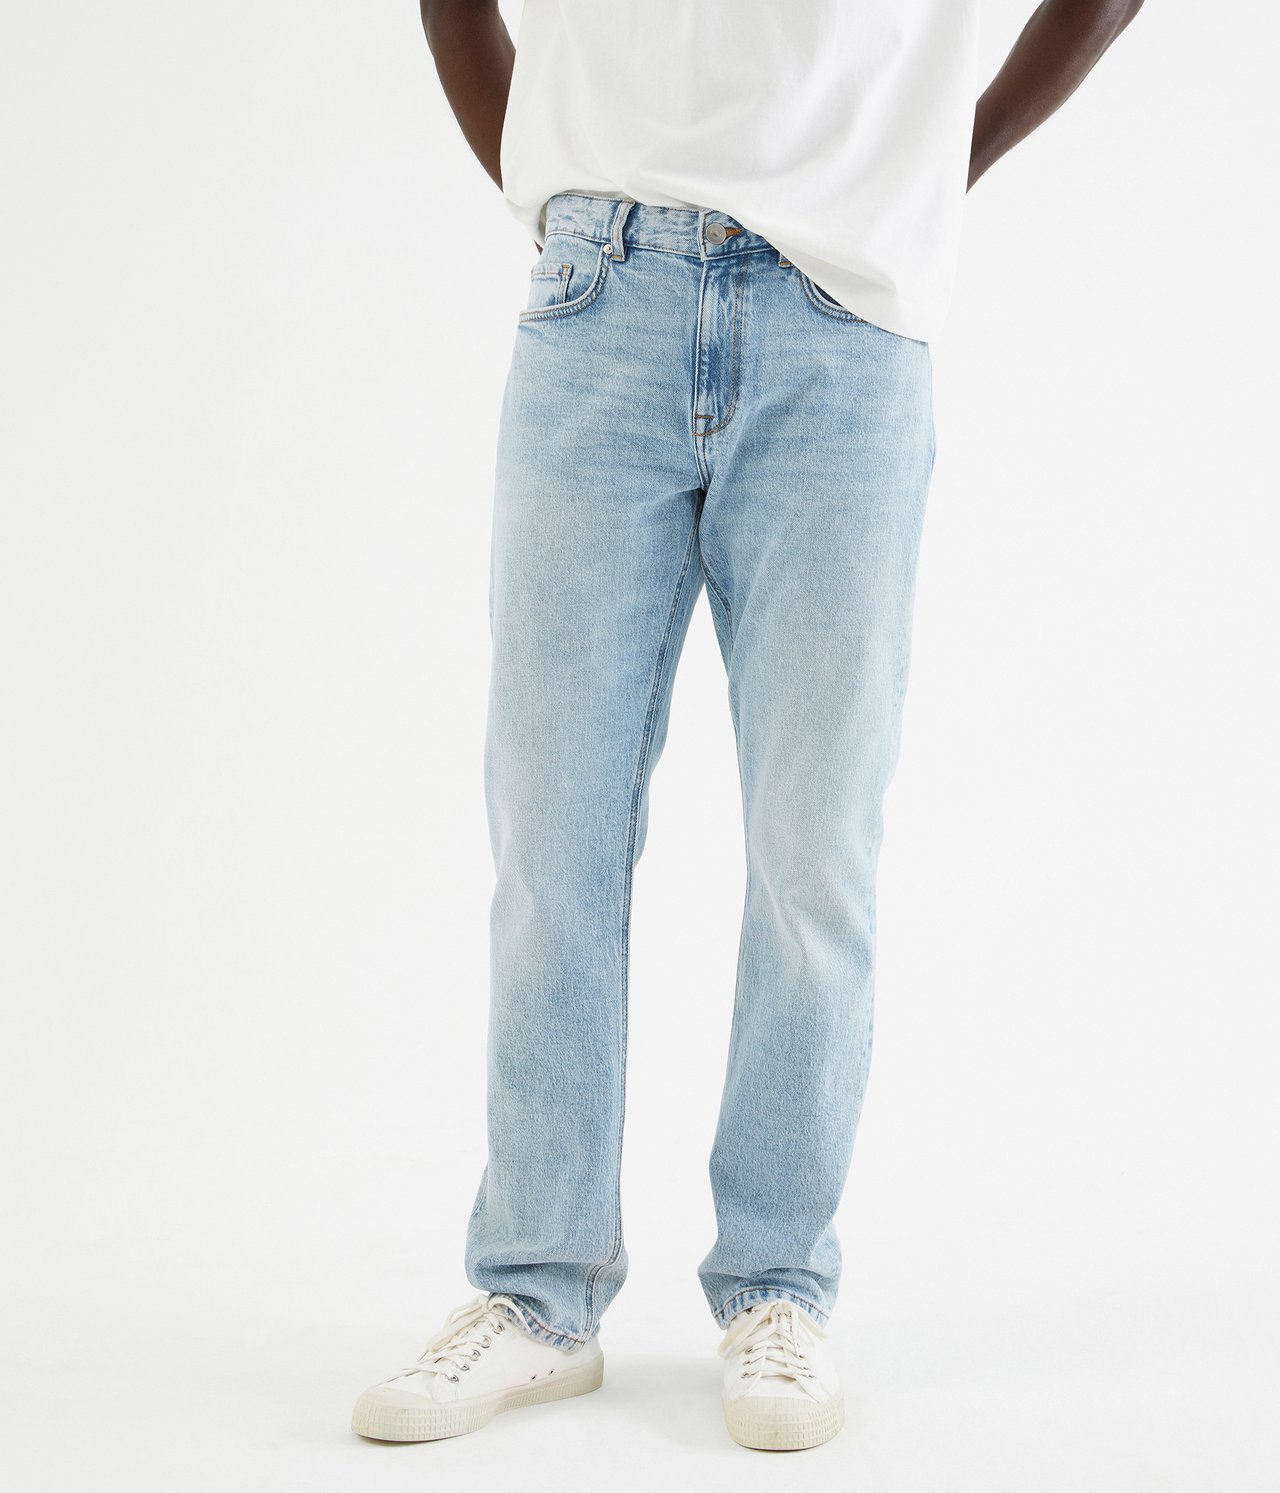 Hank regular jeans - Vaalea denimi - 189cm / Storlek: 33/34 - 3